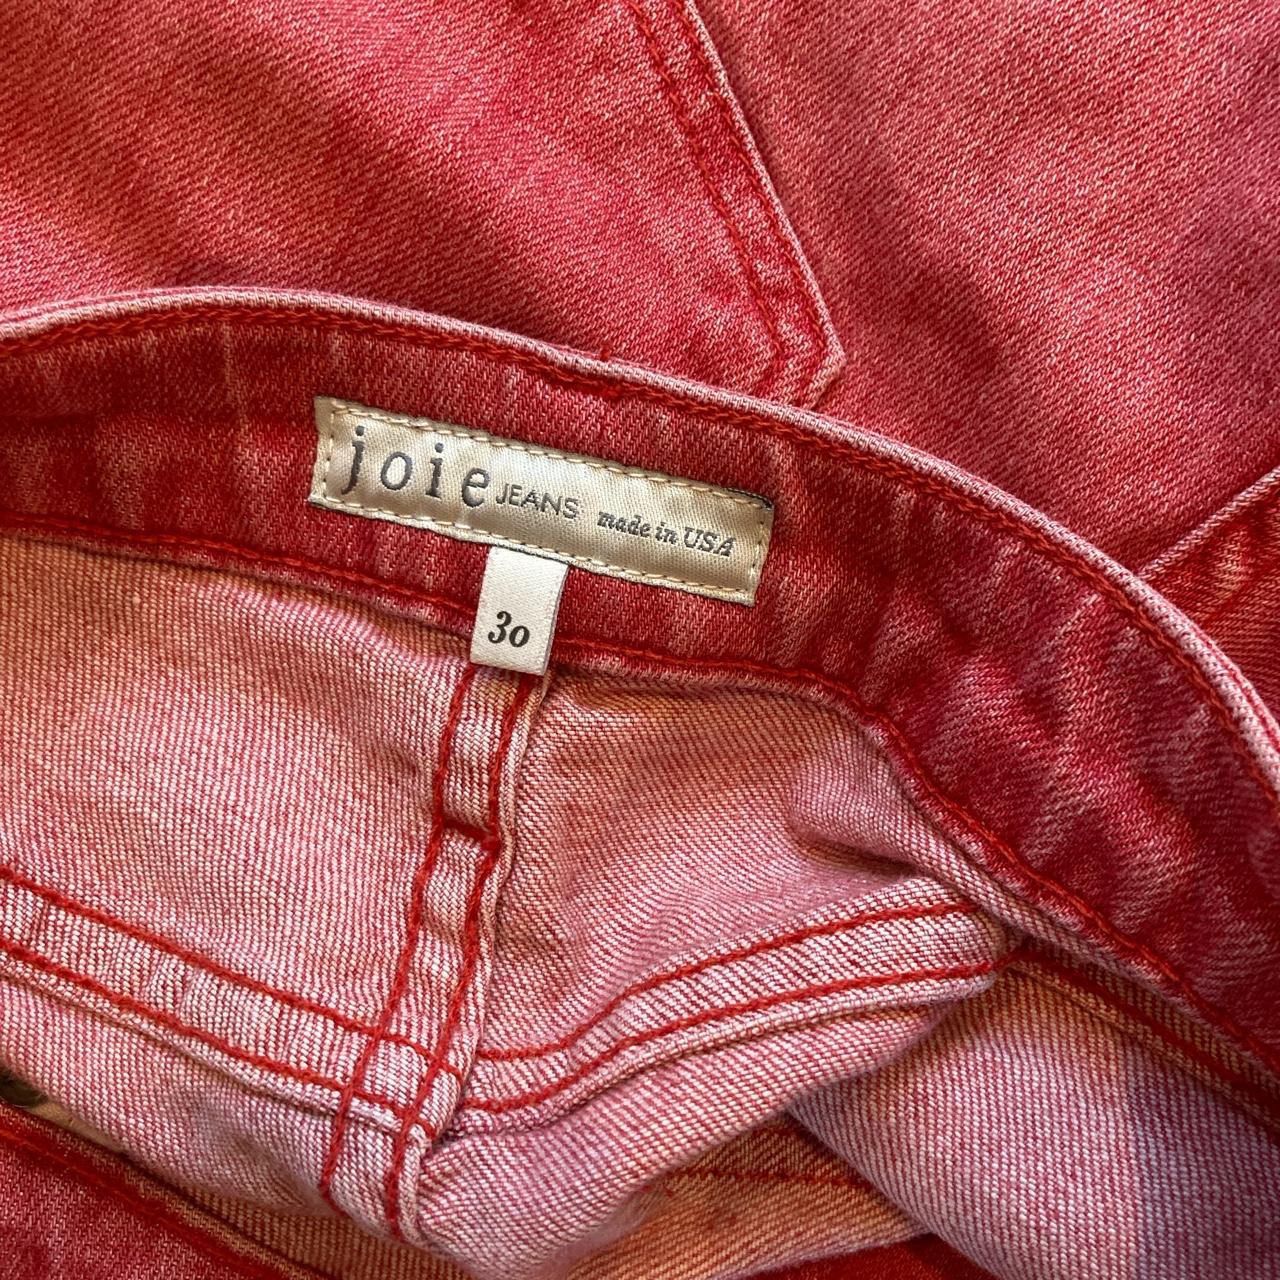 Joie Women's Red Jeans (3)